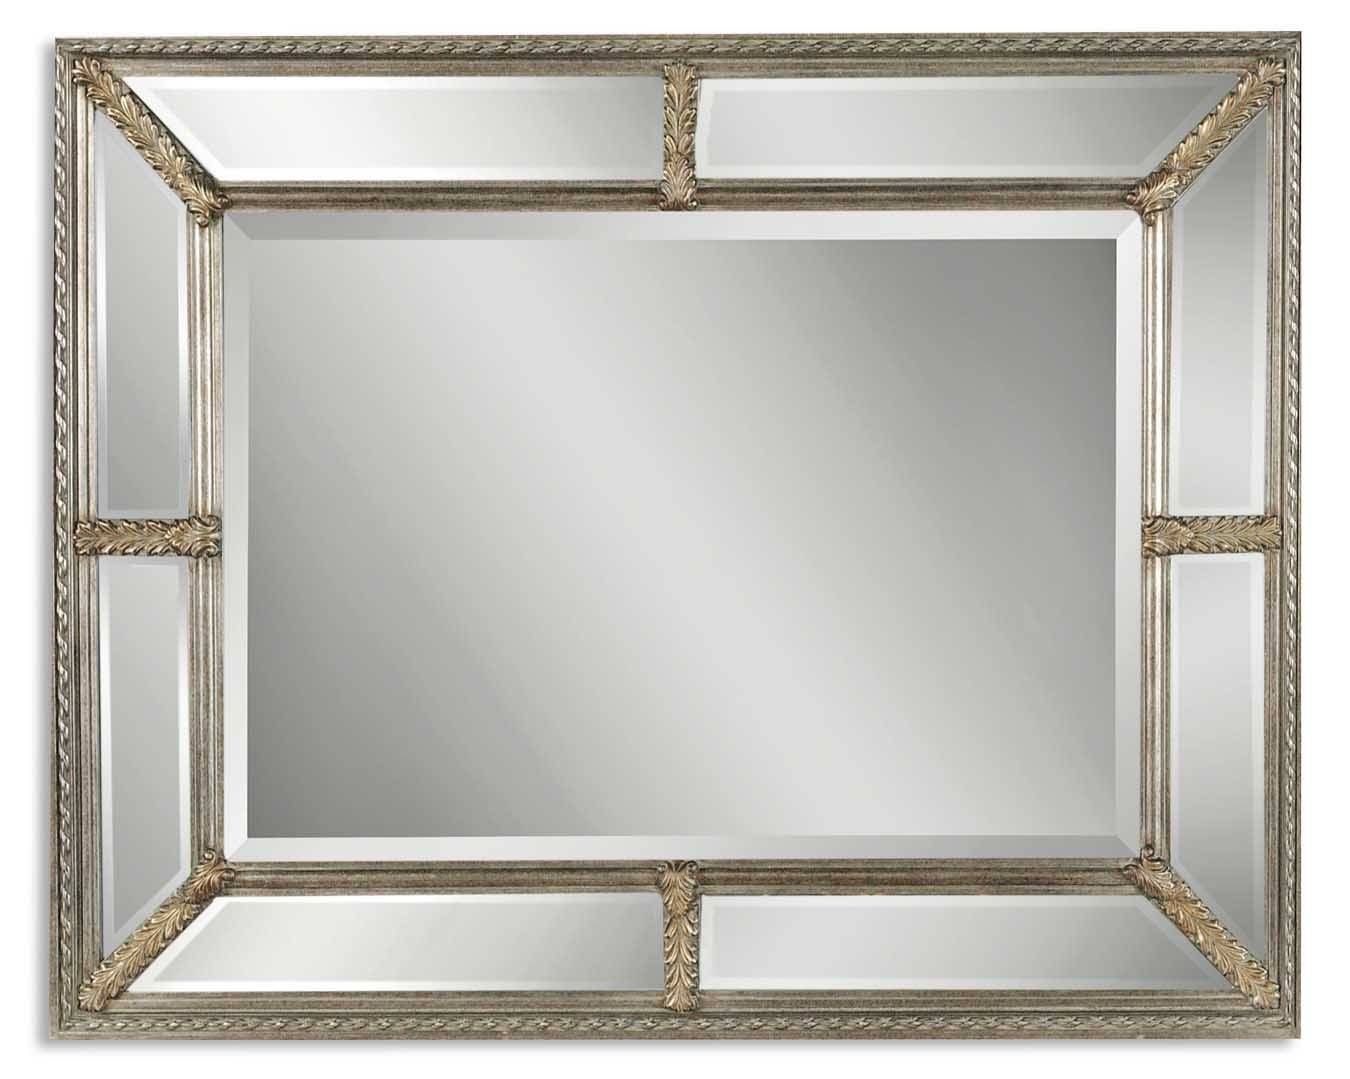 Uttermost Lucinda Antique Silver Mirror 14048 B With Antique Silver Mirrors (View 8 of 15)